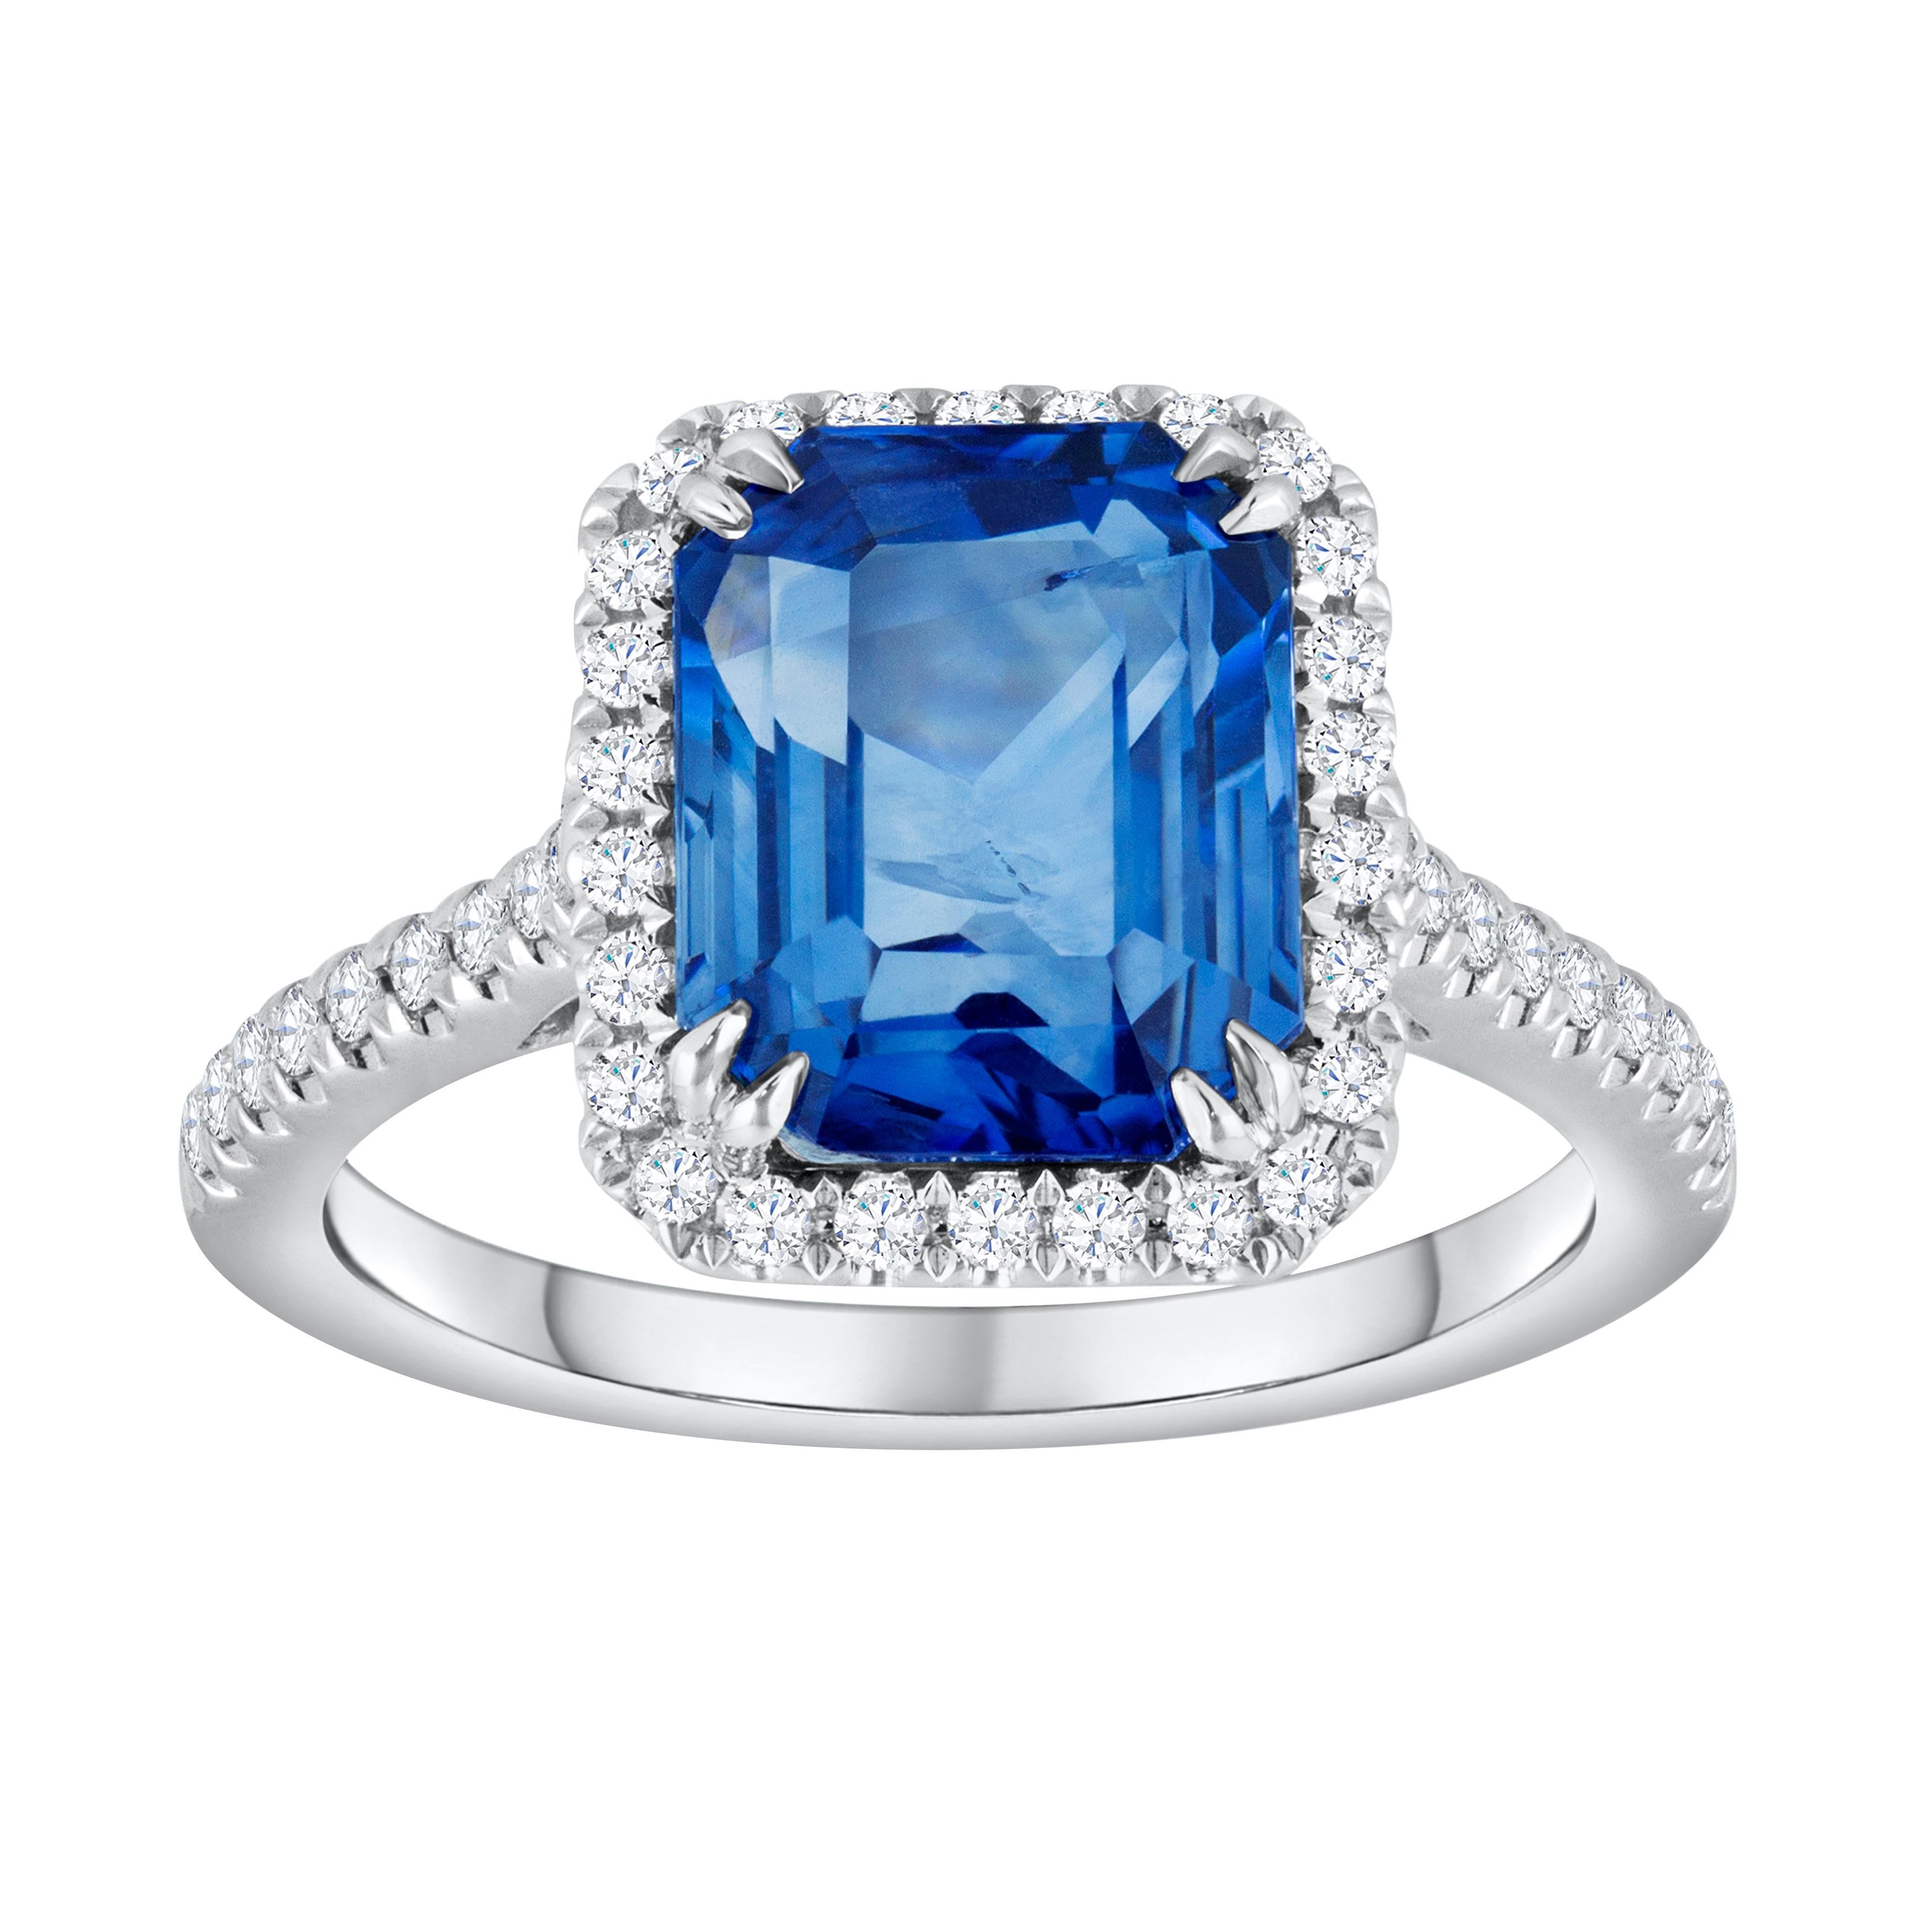 Roman Malakov 4.88 Carats Emerald Cut Blue Sapphire Halo Engagement Ring For Sale